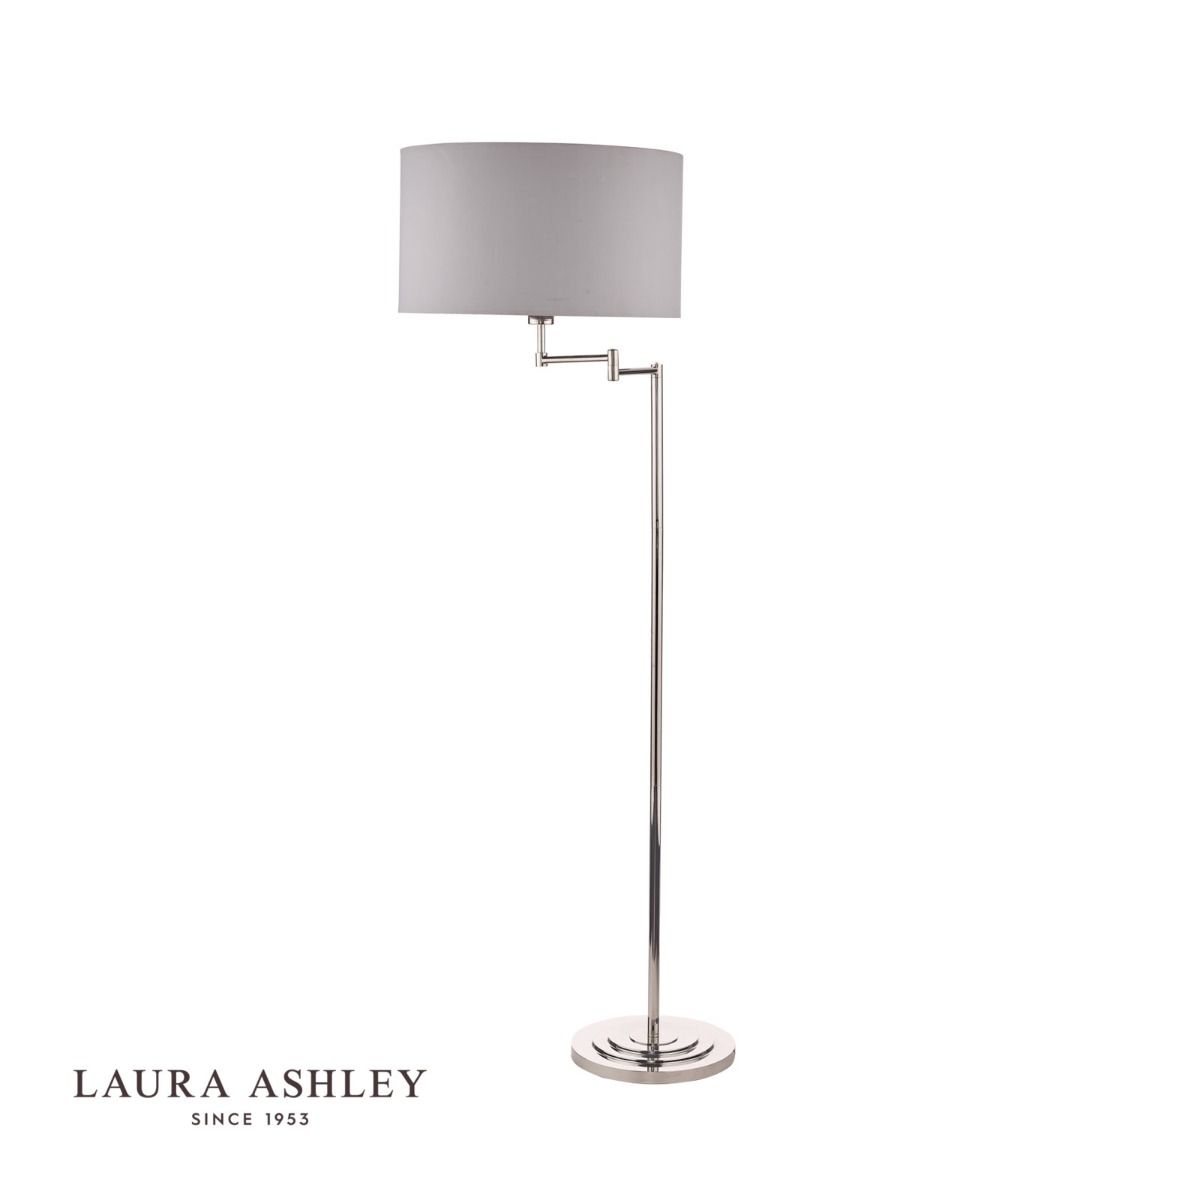 Laura Ashley Marlowe Polished Nickel, Swing Arm Floor Lamp